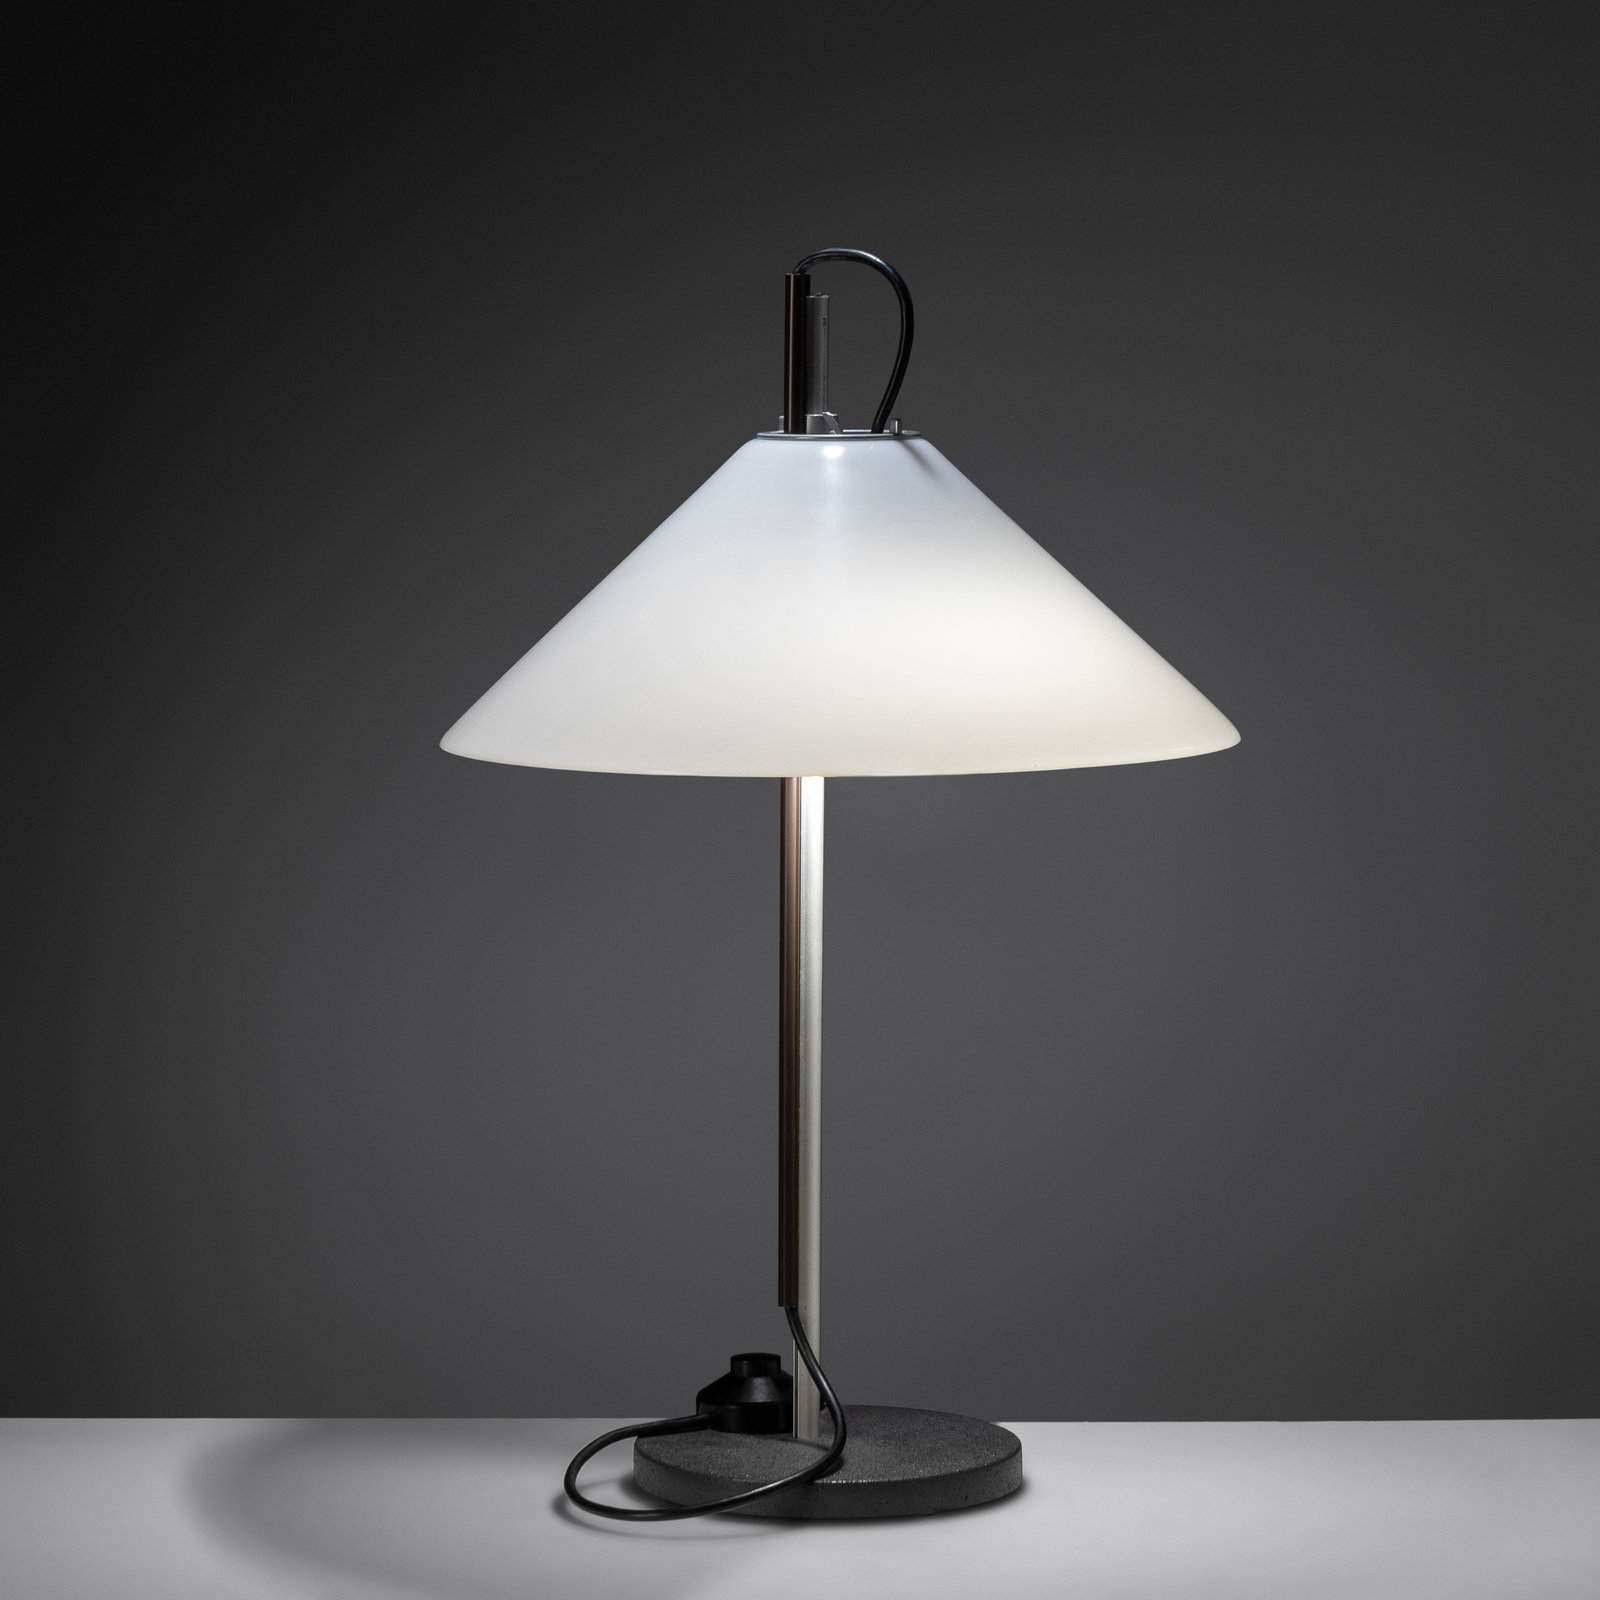 Aggregato' Table Lamps, c. 1976 Artemide, Italy